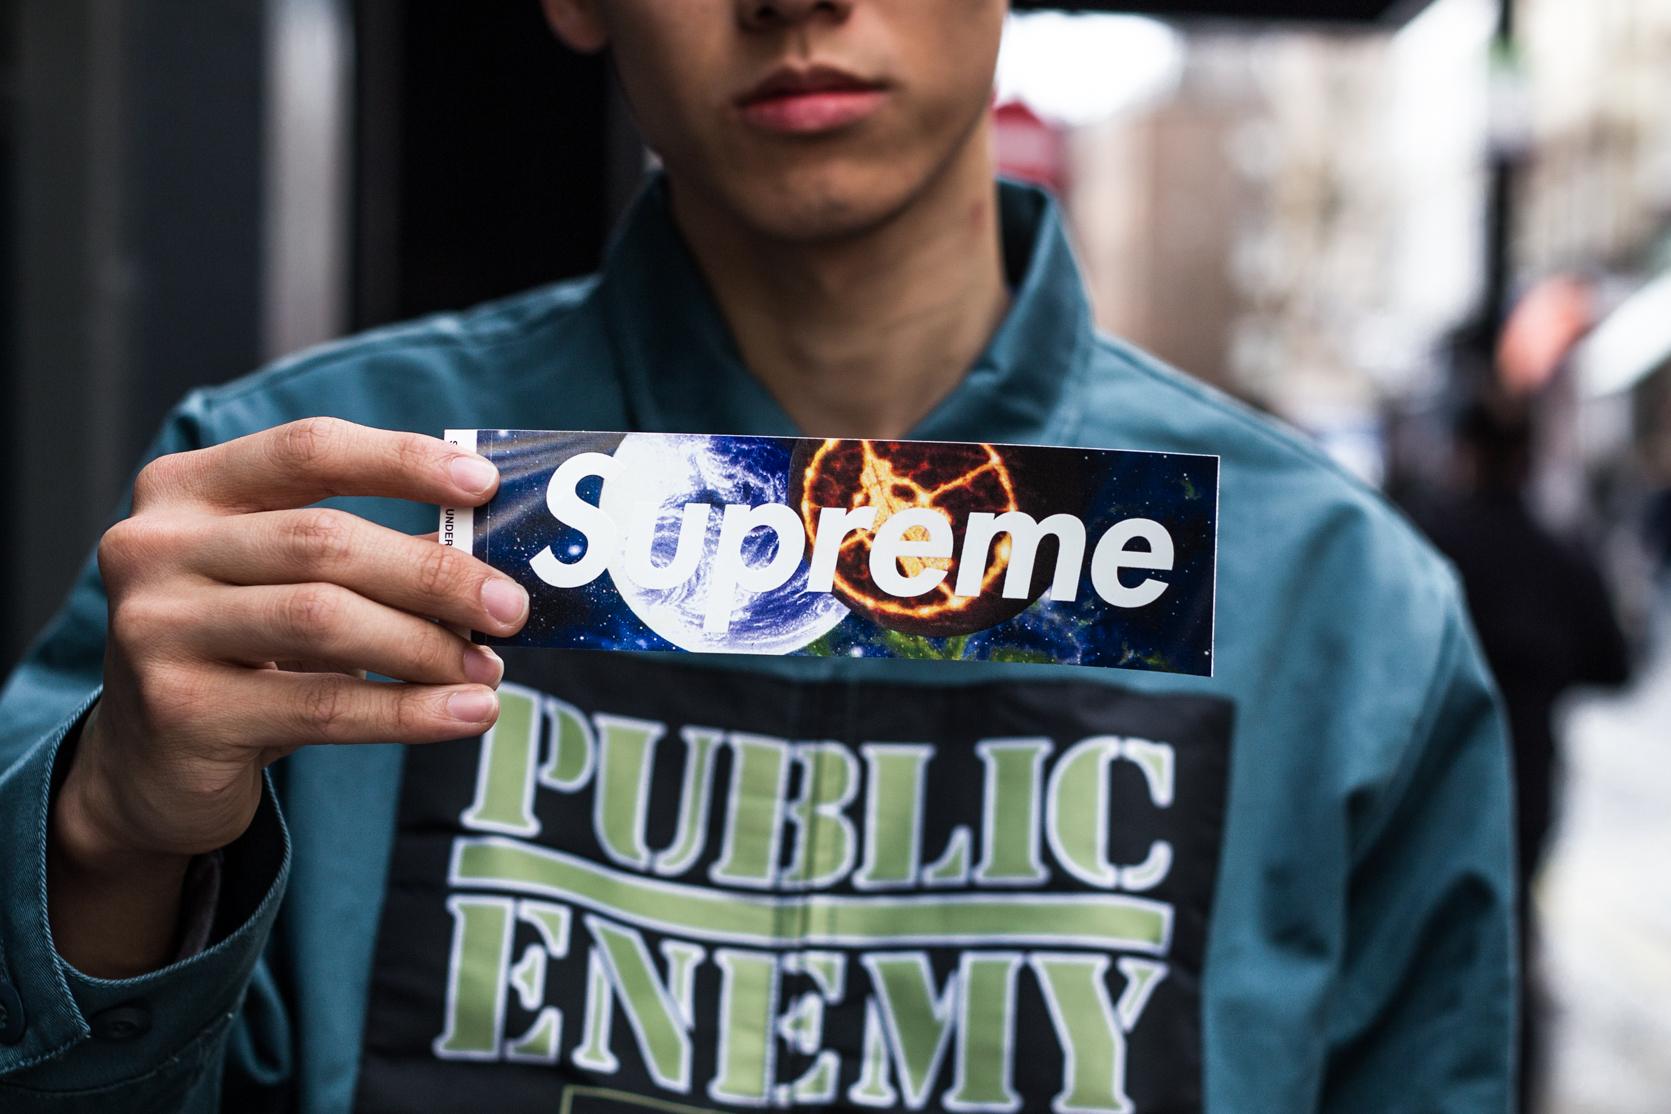 Supreme (@supremenewyork) • Instagram photos and videos